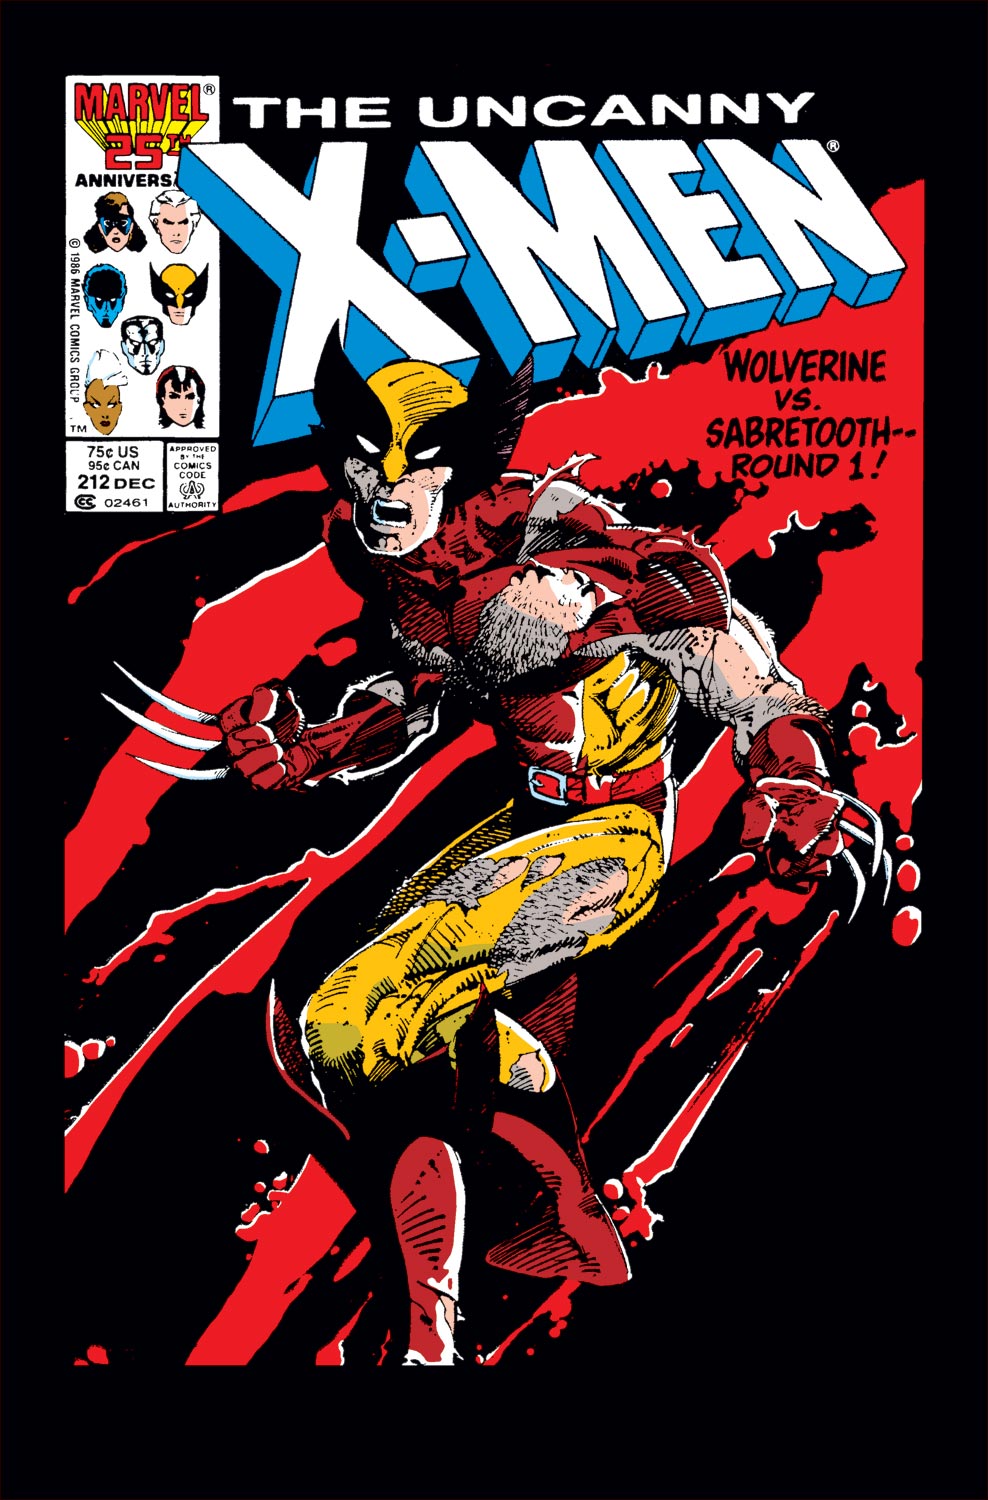 Uncanny X-Men (1981) #212